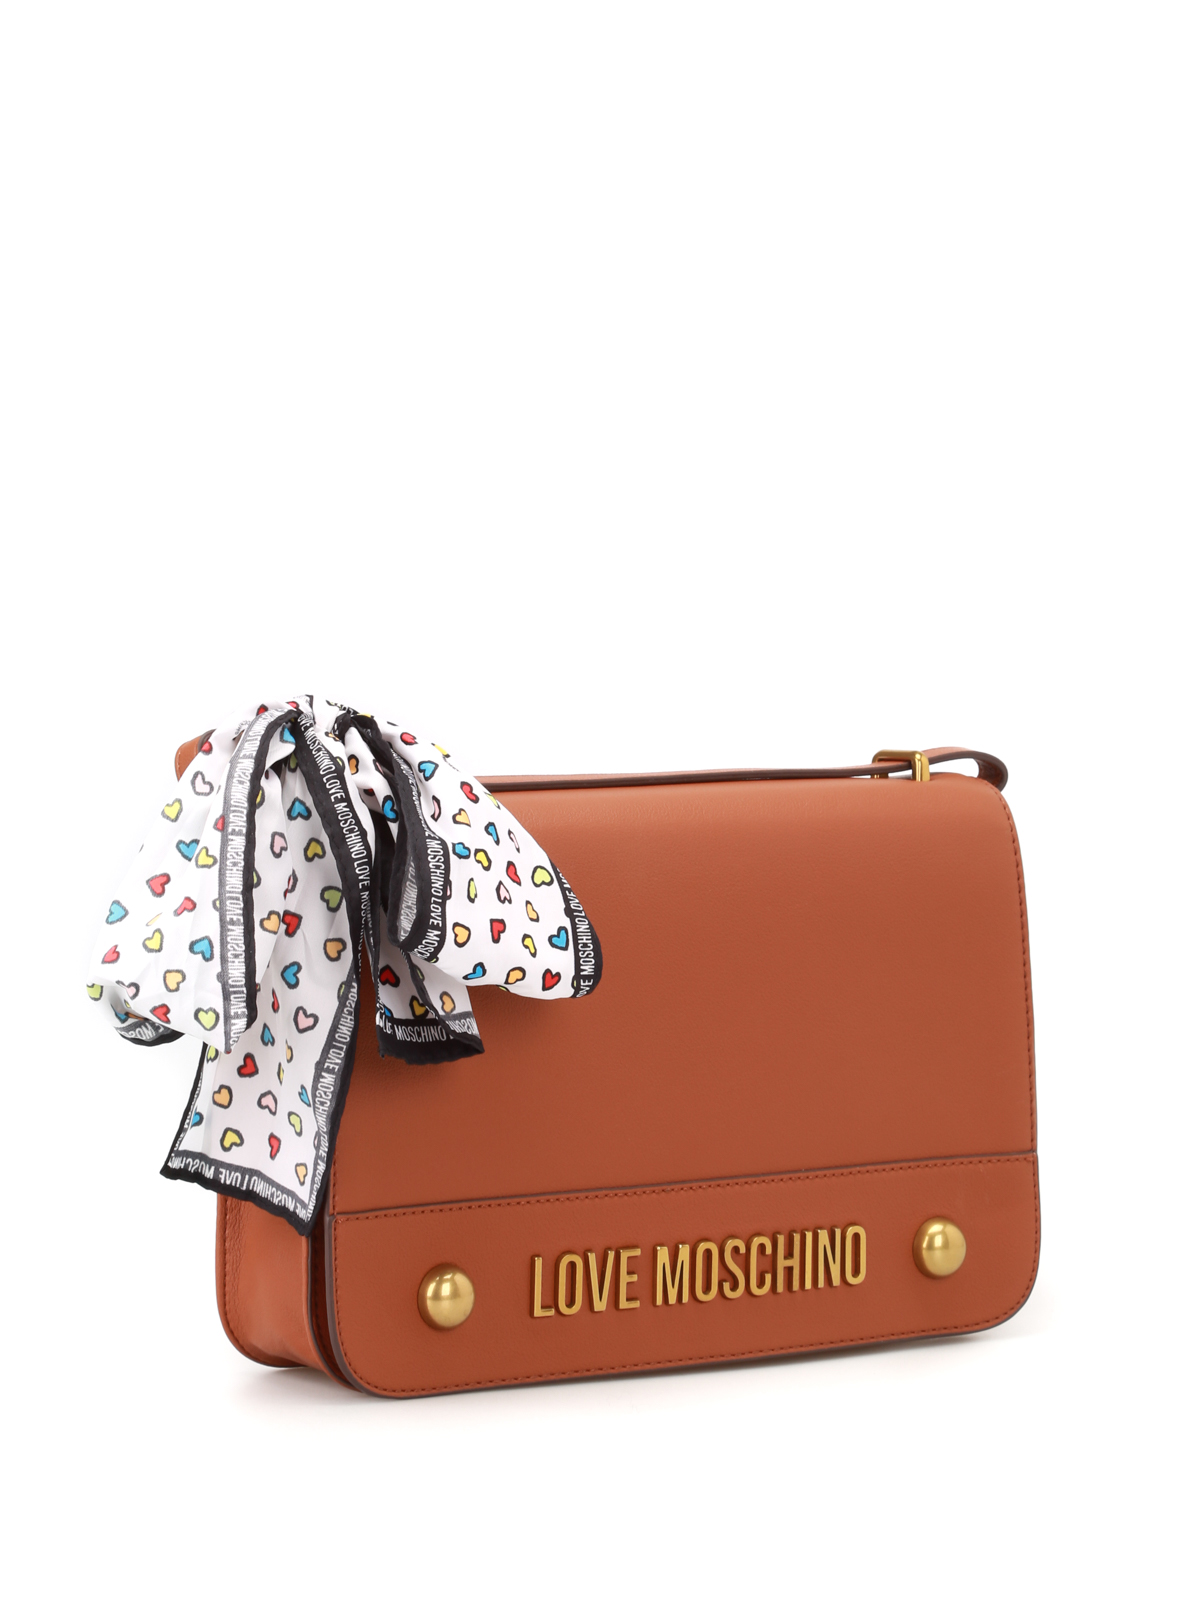 love moschino bow bag